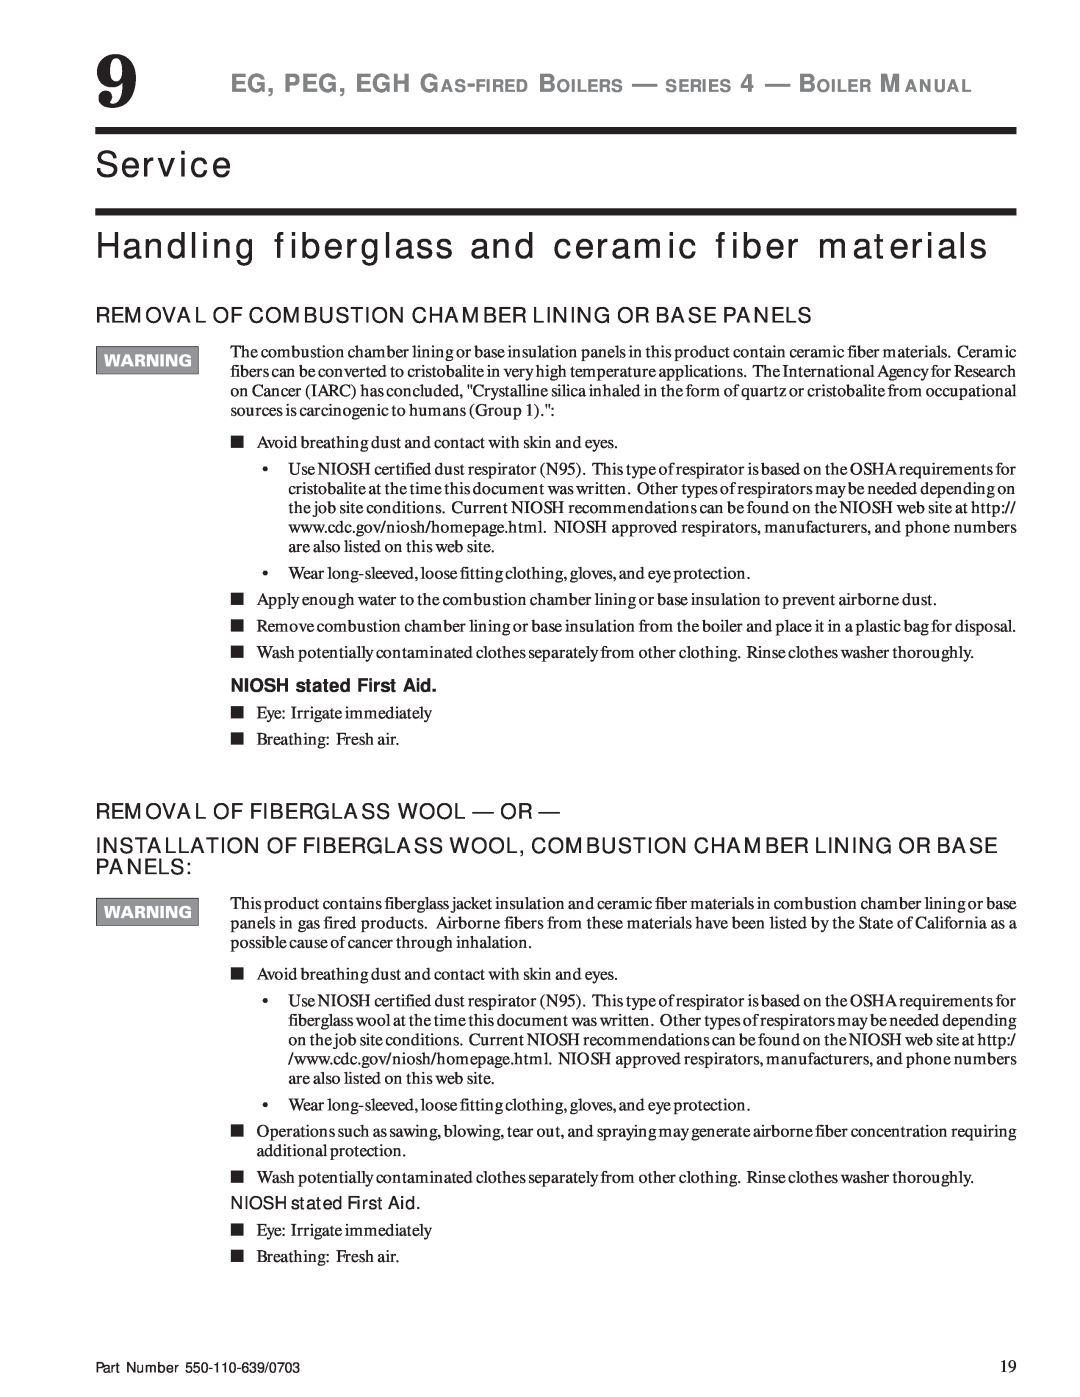 Weil-McLain EG manual Service, Handling fiberglass and ceramic fiber materials, Removal Of Fiberglass Wool - Or 